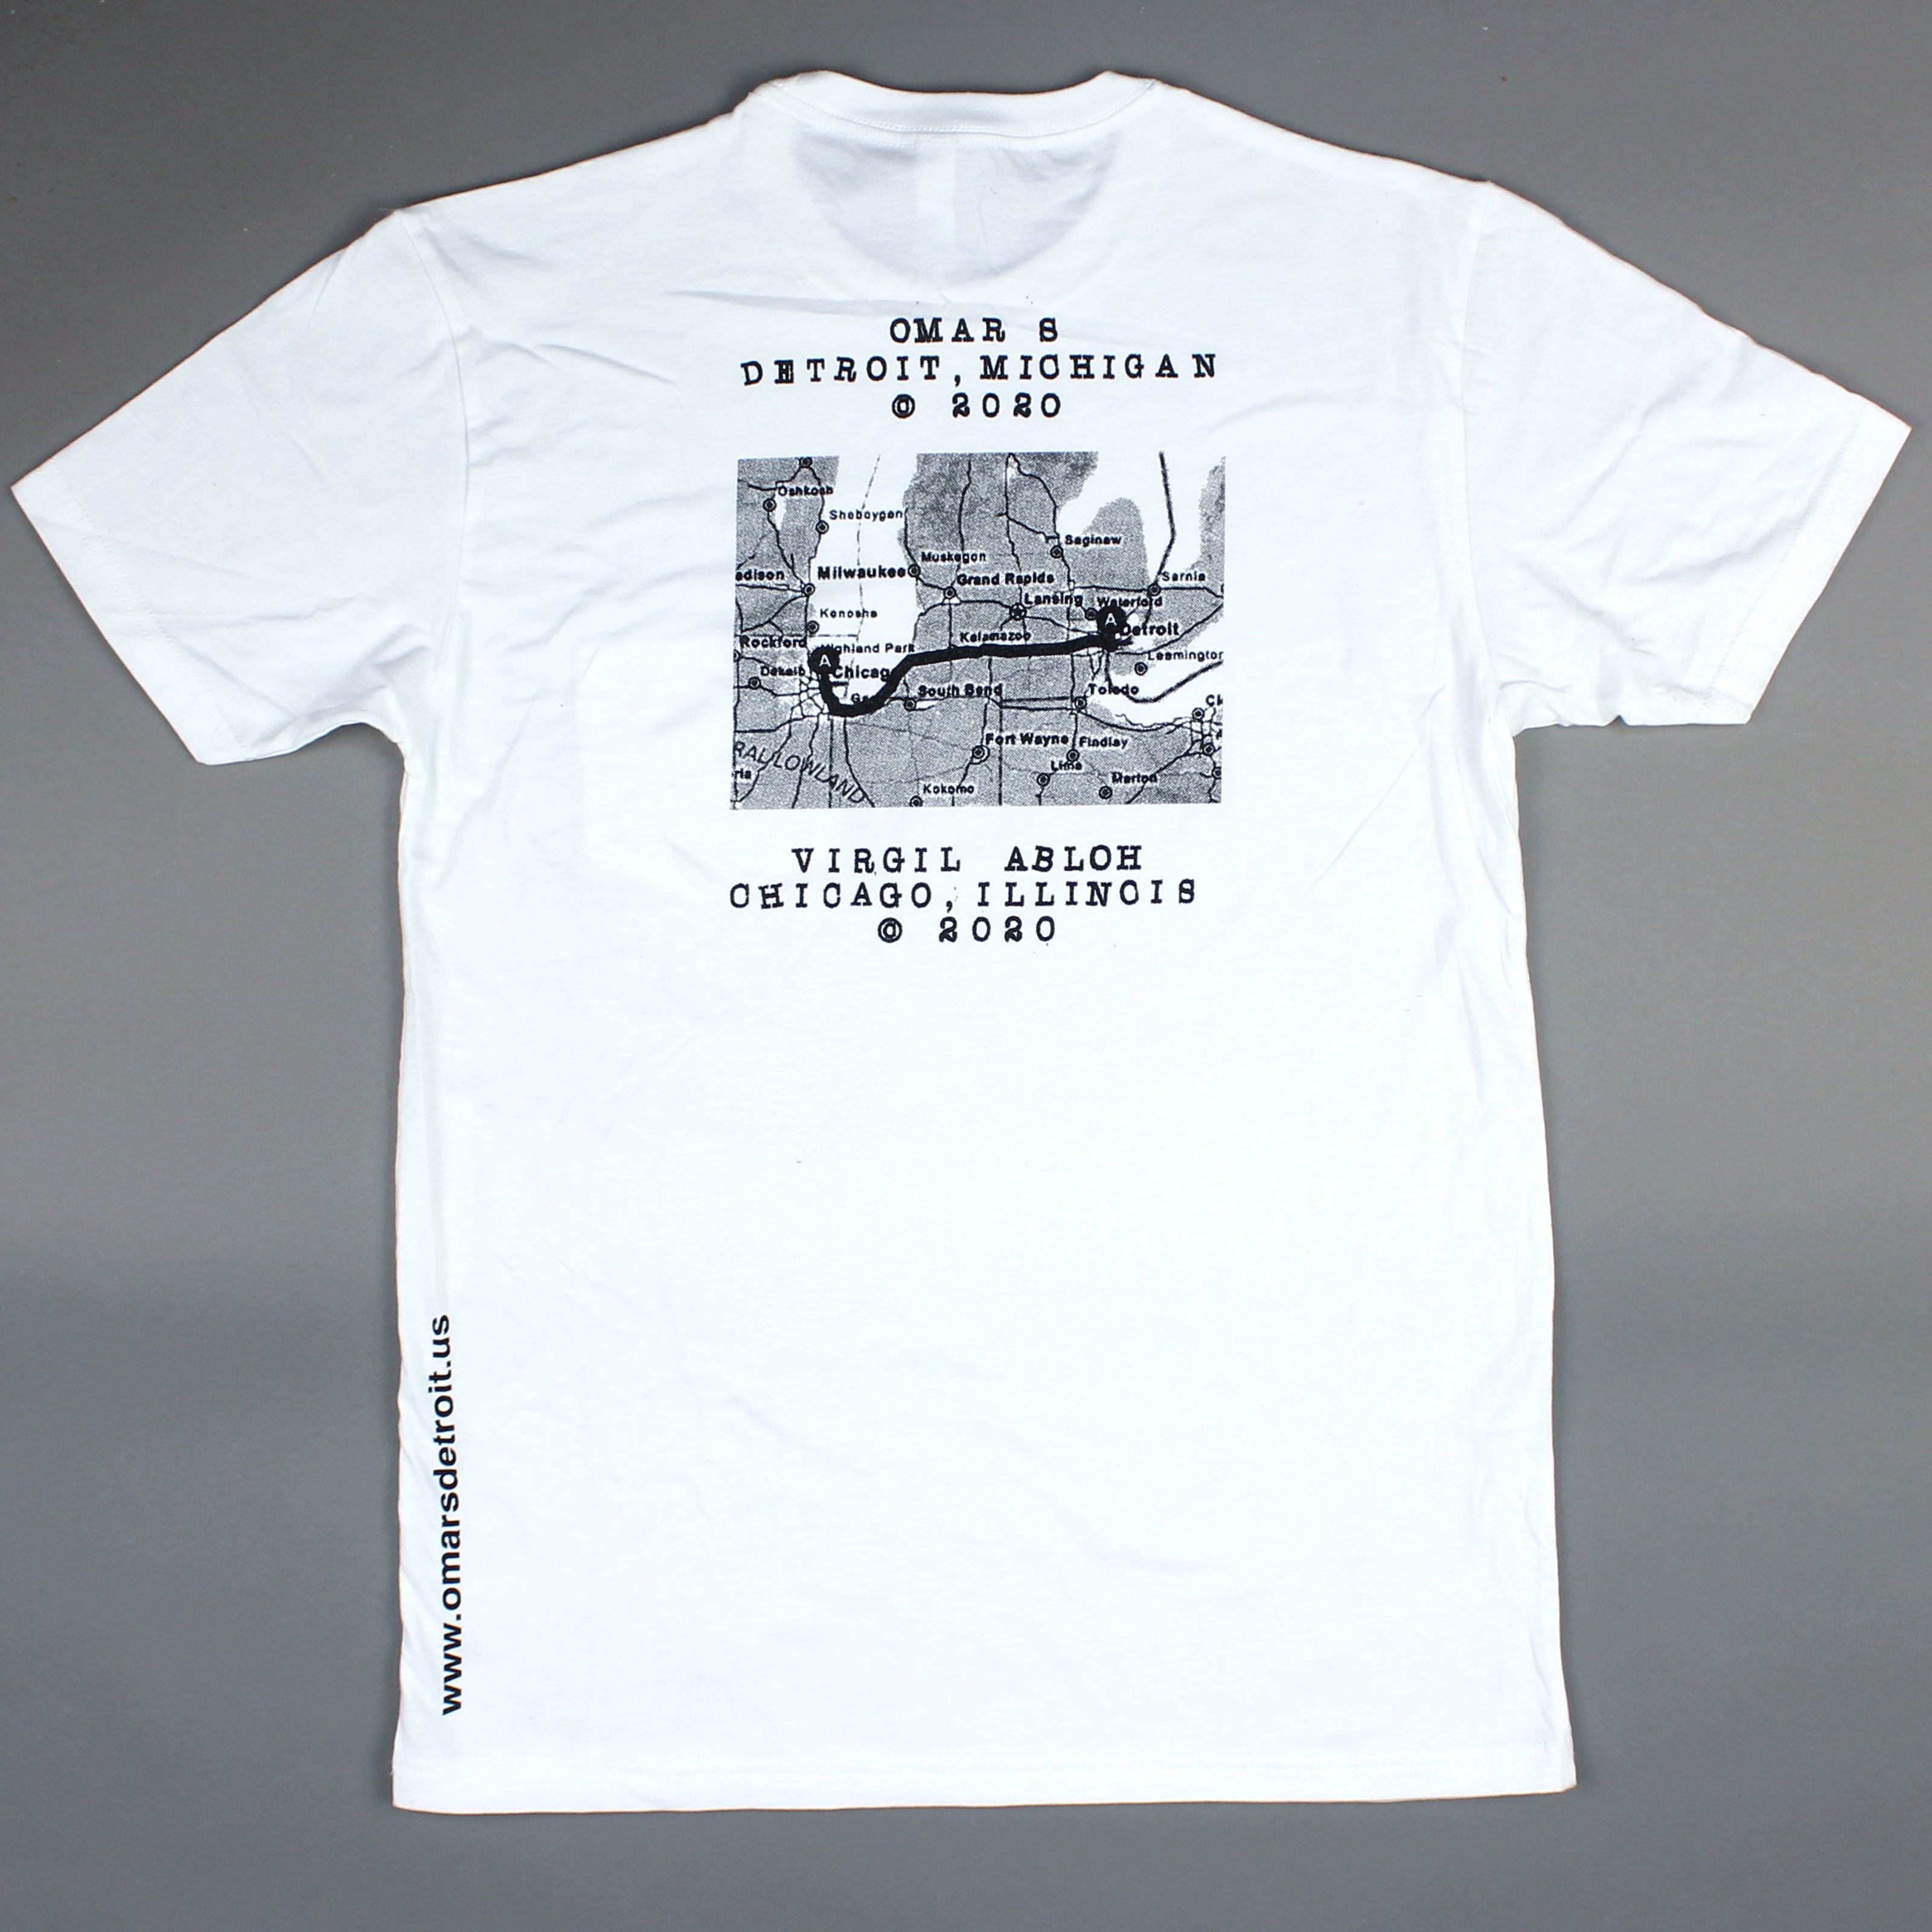 Omar S x Virgil Abloh T-Shirt